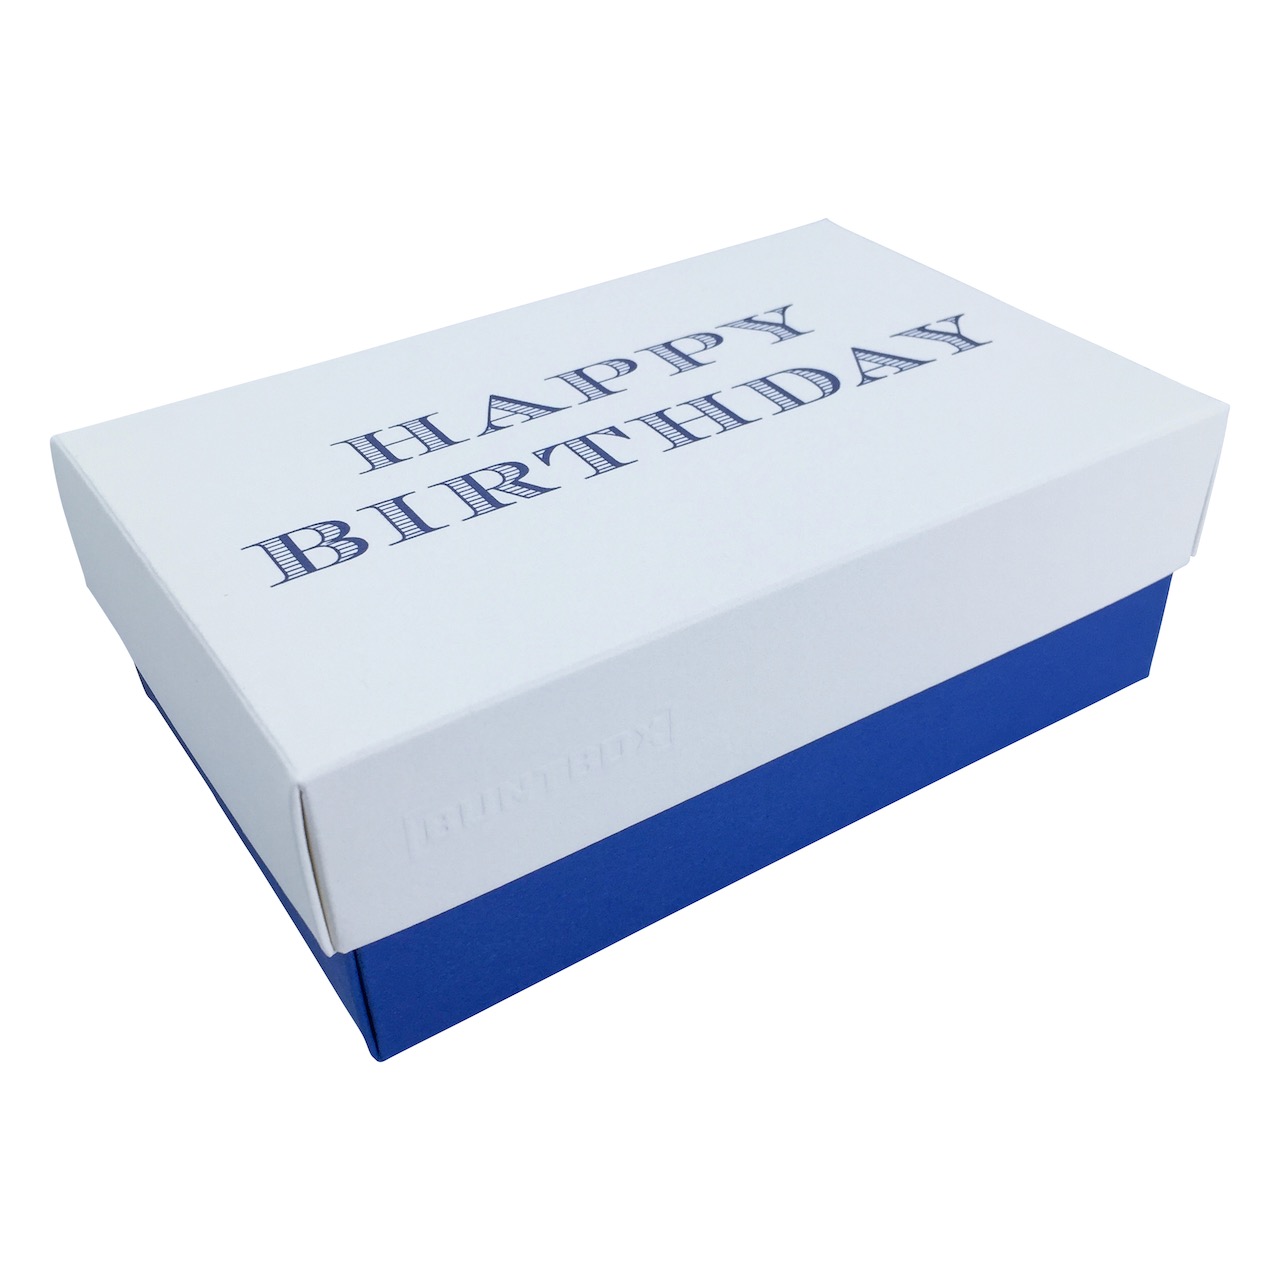 Buntbox Fine Paper Happy Birthday